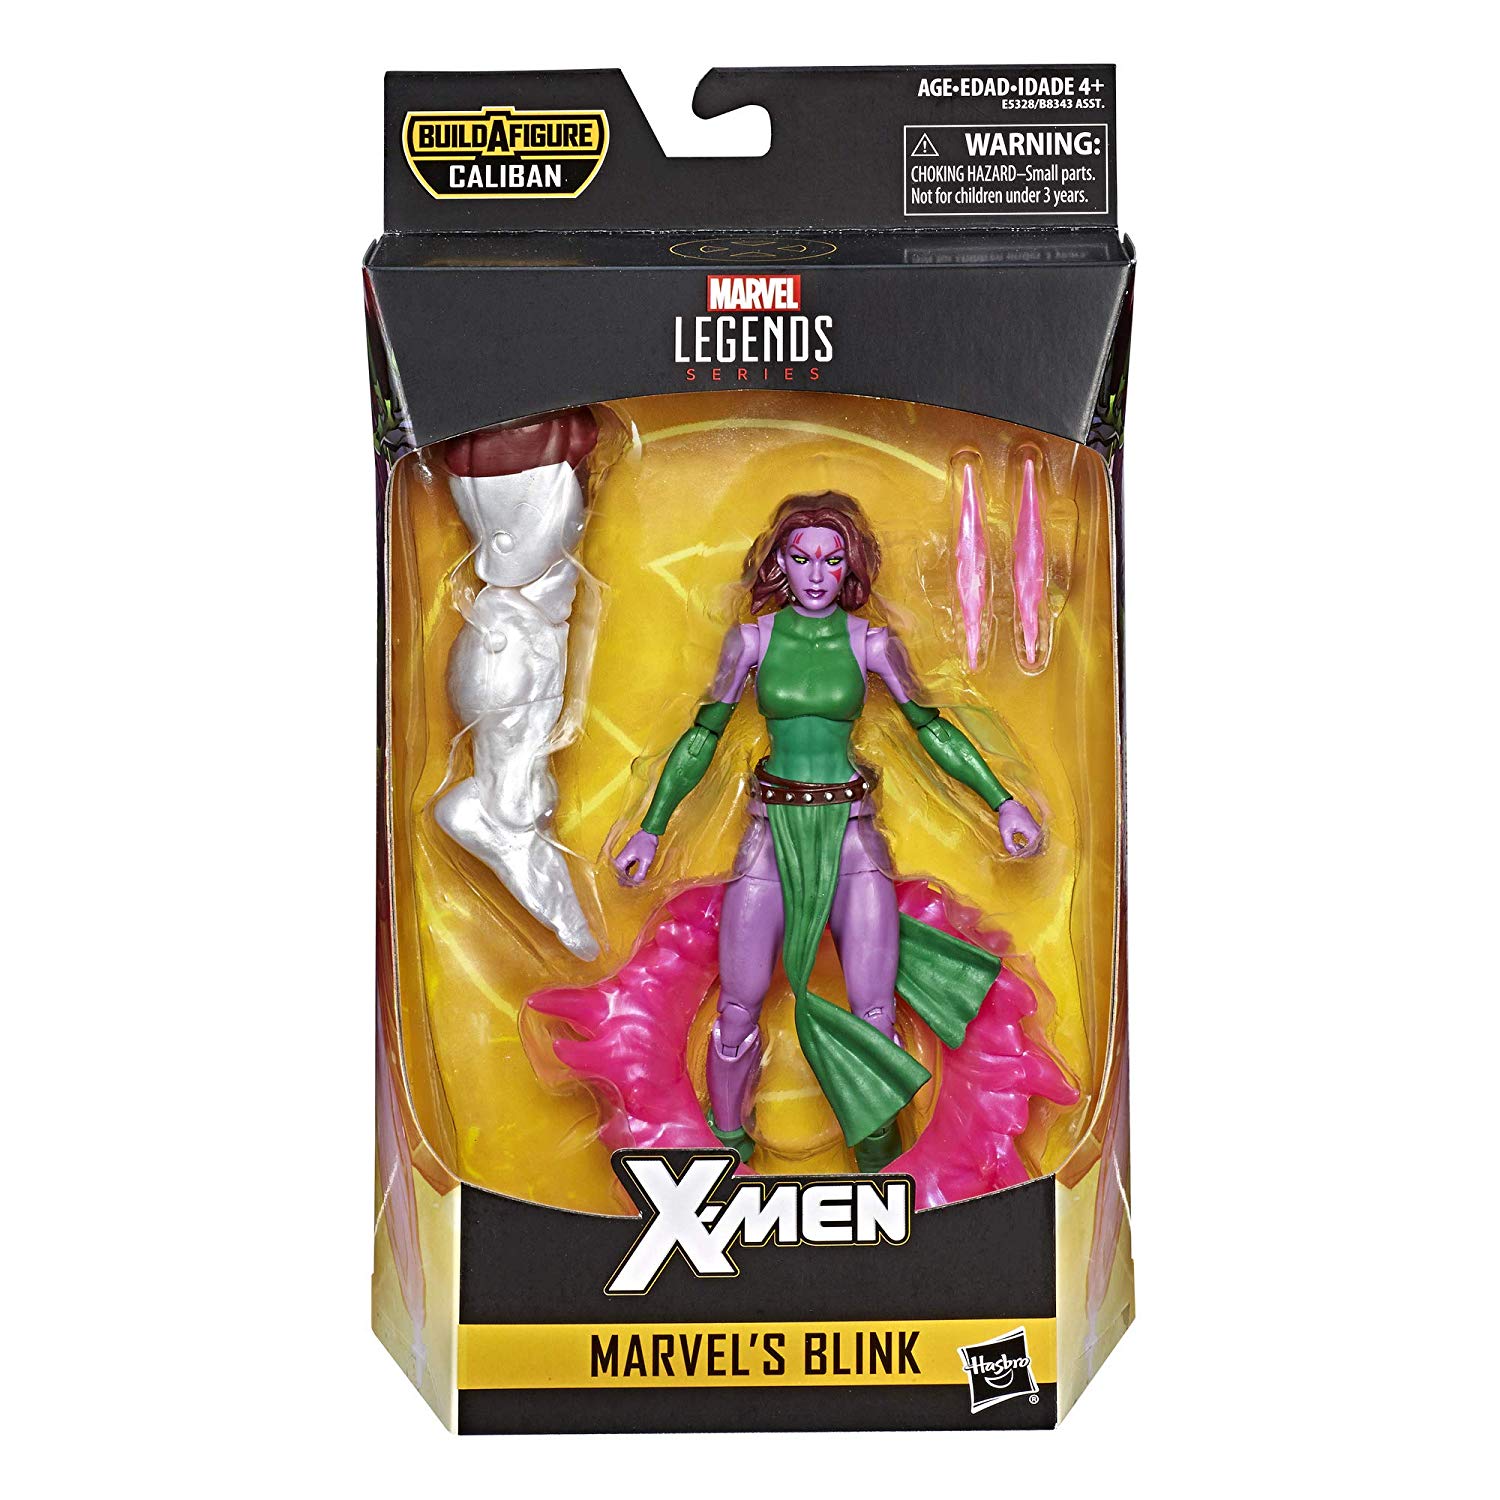 Marvel Legends X-Men 6" Blink Caliban BuildAFigure